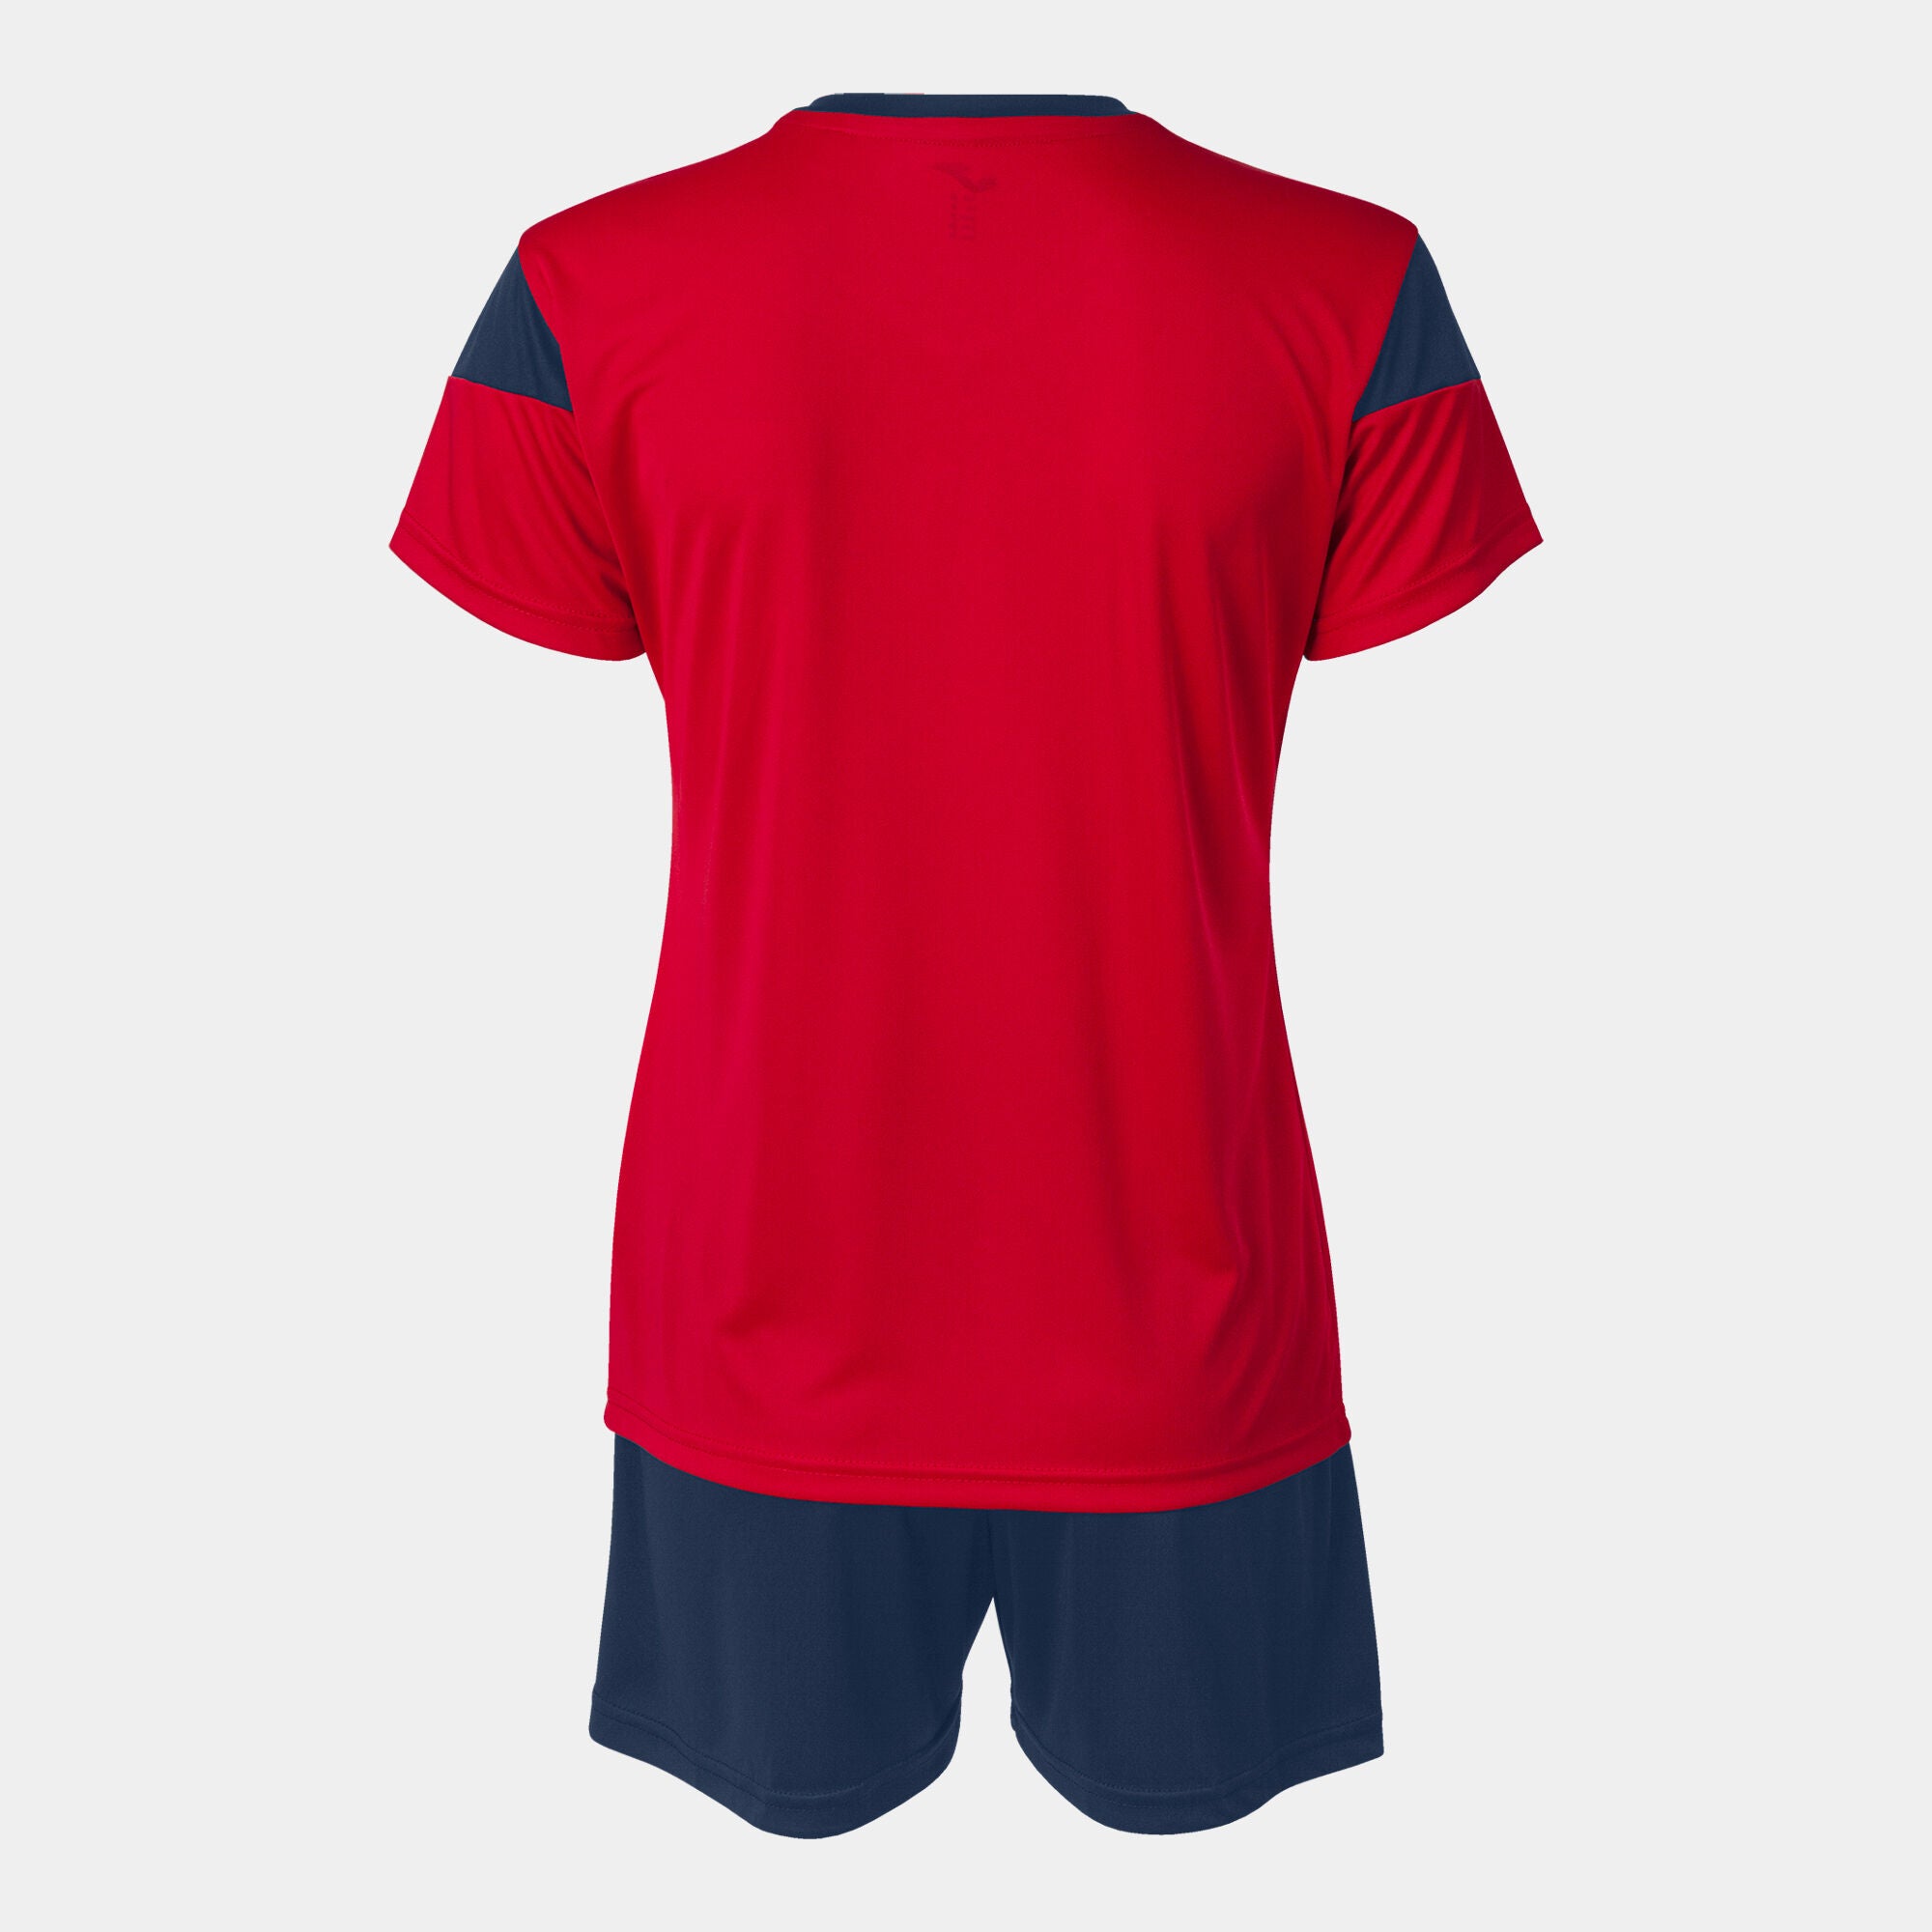 Joma Phoenix Activewear T-shirt & Short Set Ladies-2372-Red Navy